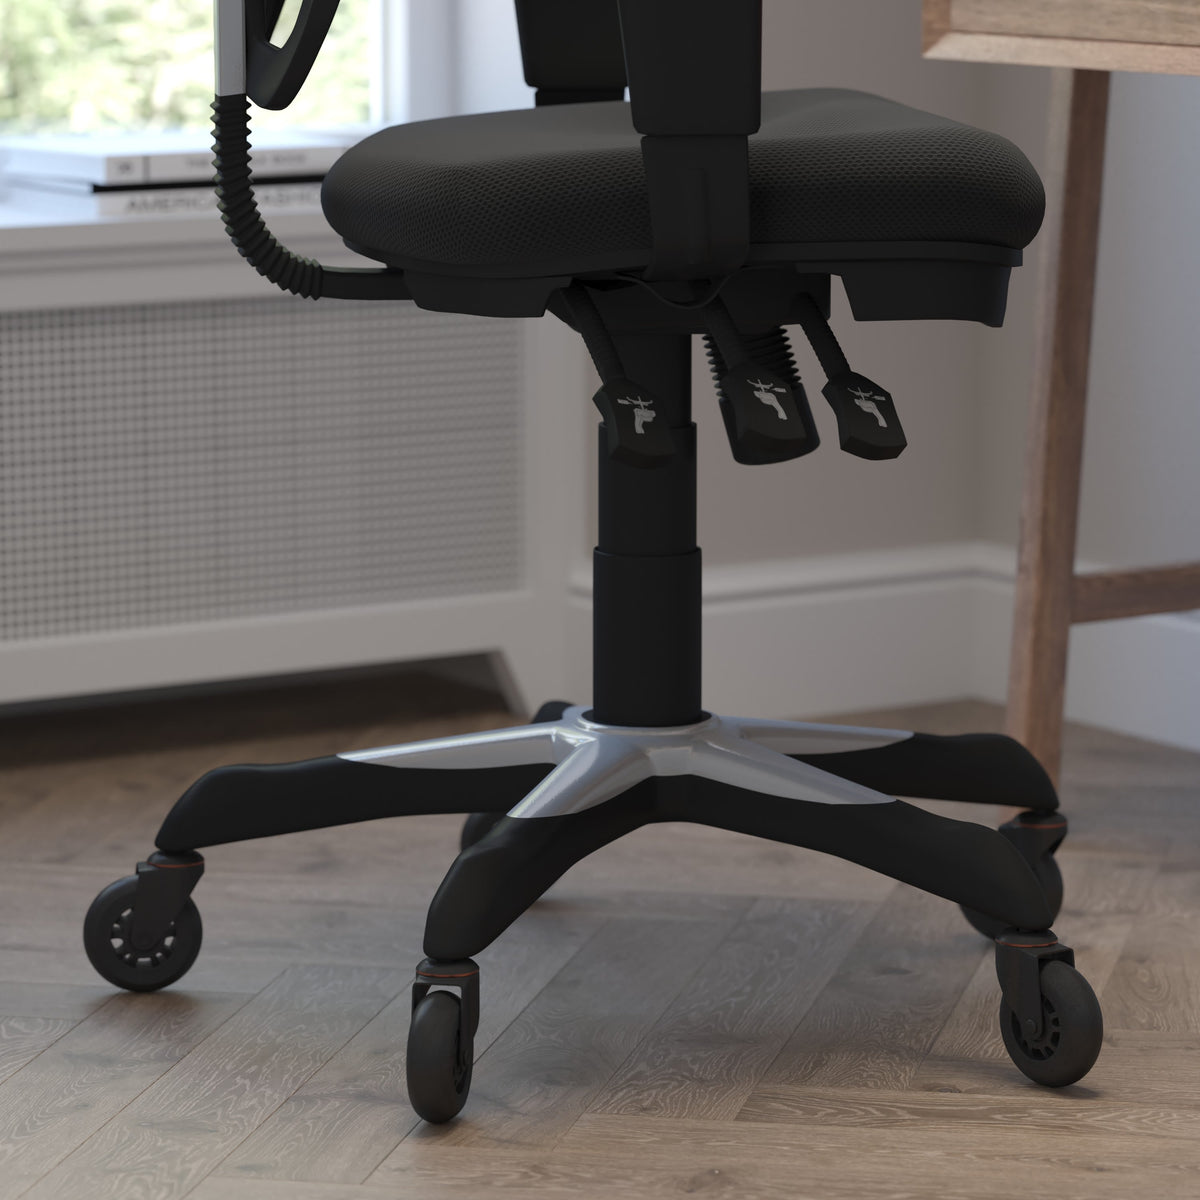 Black/Black Frame |#| Mid-Back Ergonomic Multifunction Mesh Chair with Polyurethane Wheels-Black